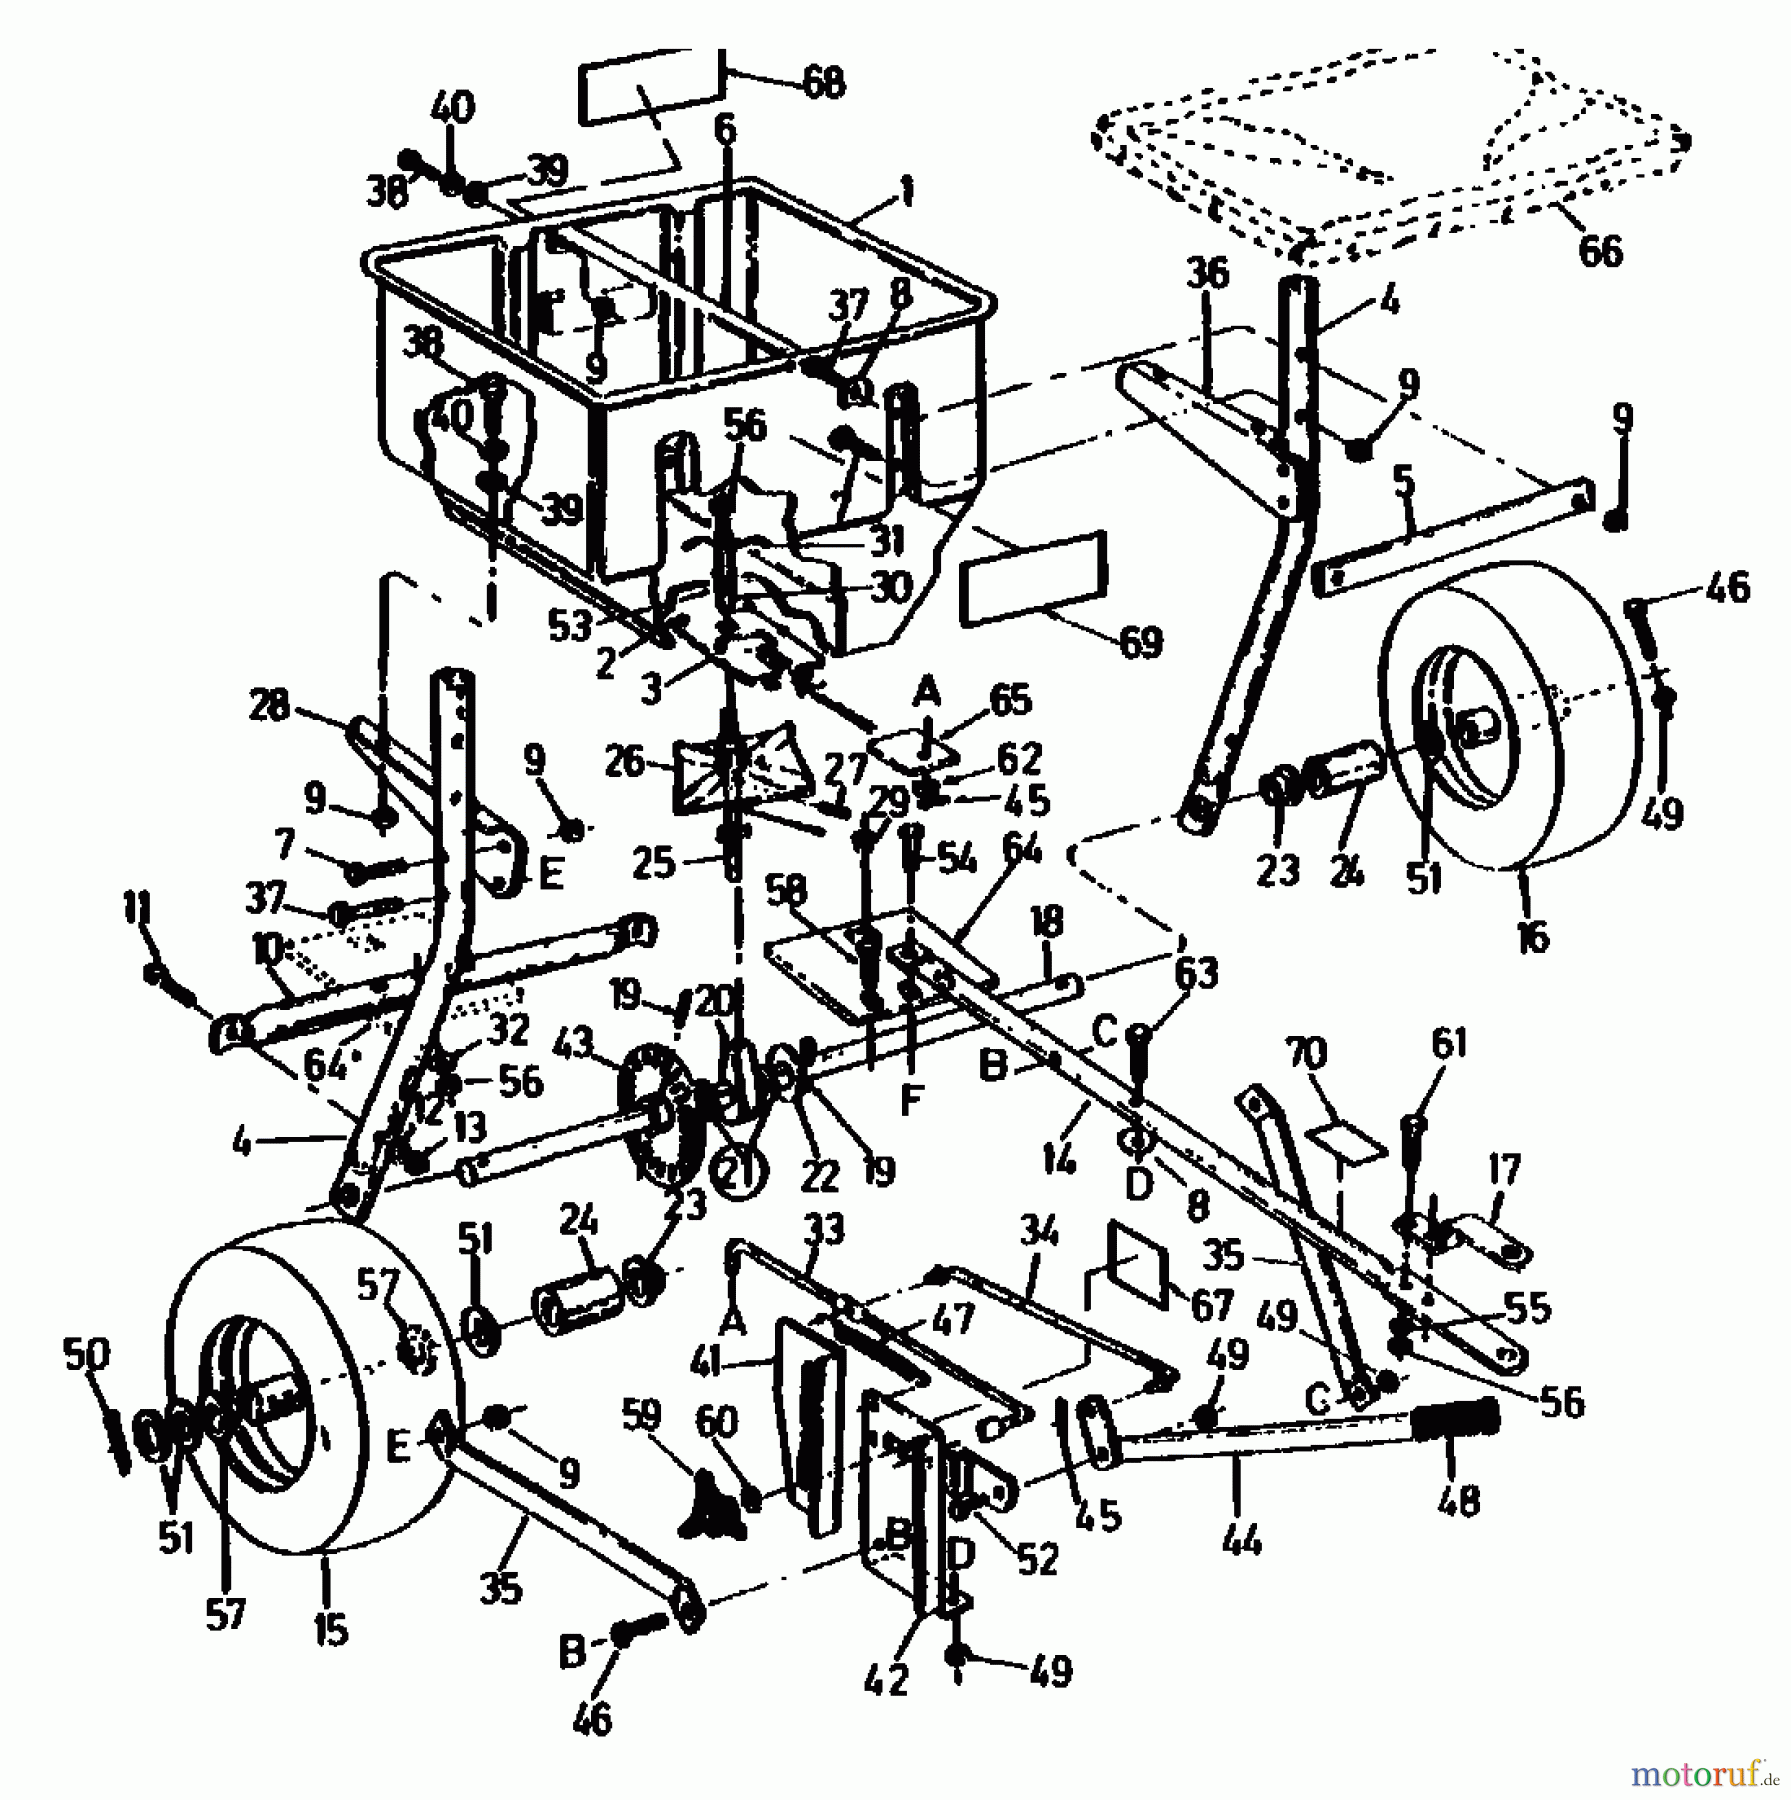  MTD Accessories Accessories garden and lawn tractors Spreader DS 70 04012.03  (1991) Basic machine